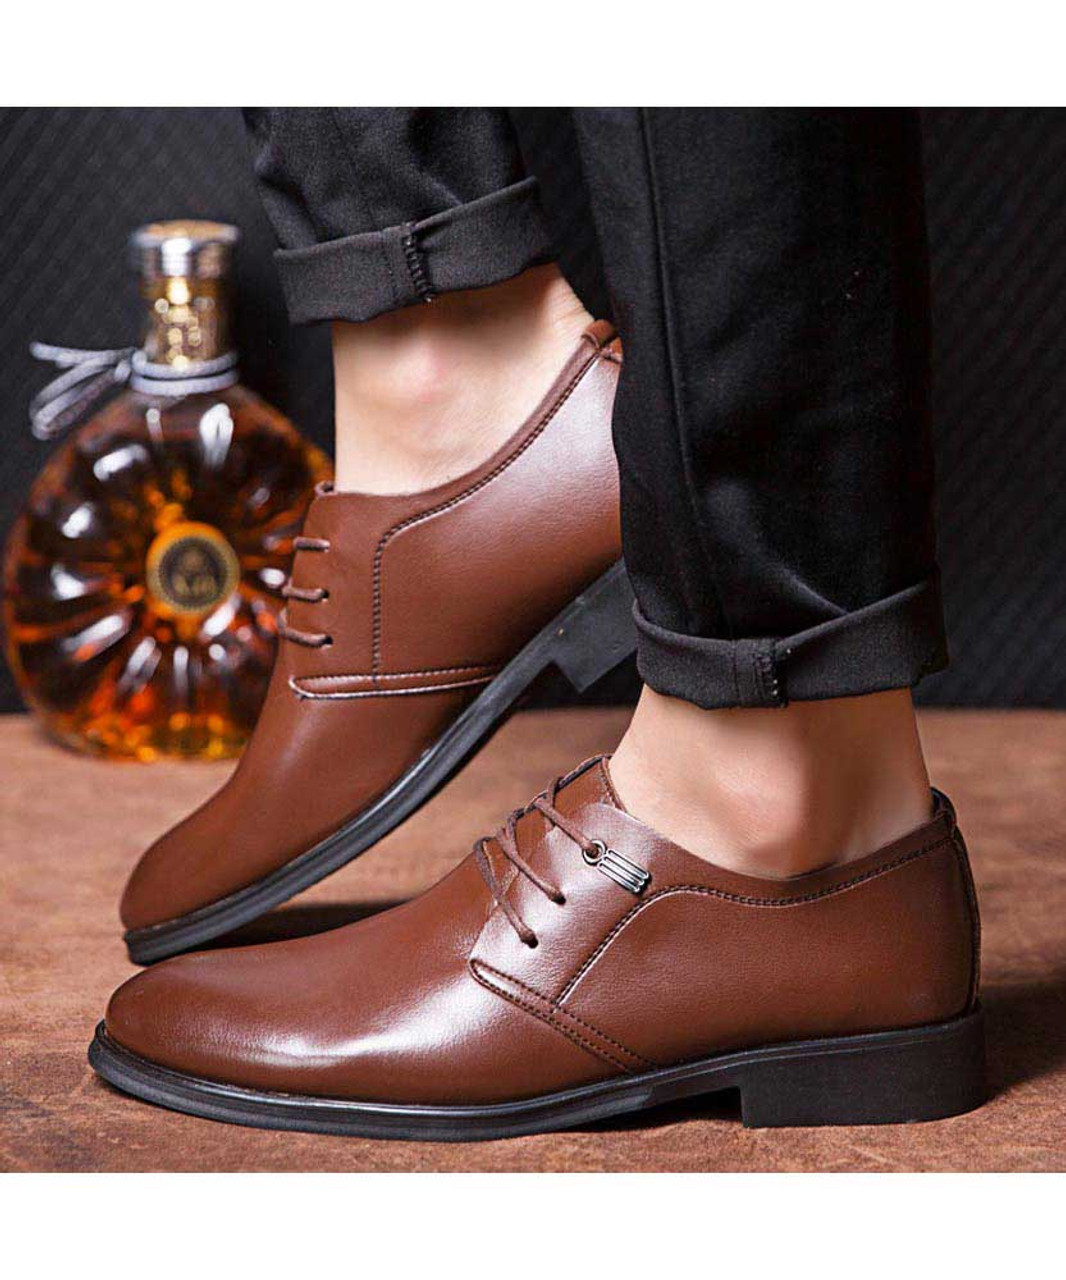 Brown urban leather derby dress shoe retro tone | Mens dress shoes ...